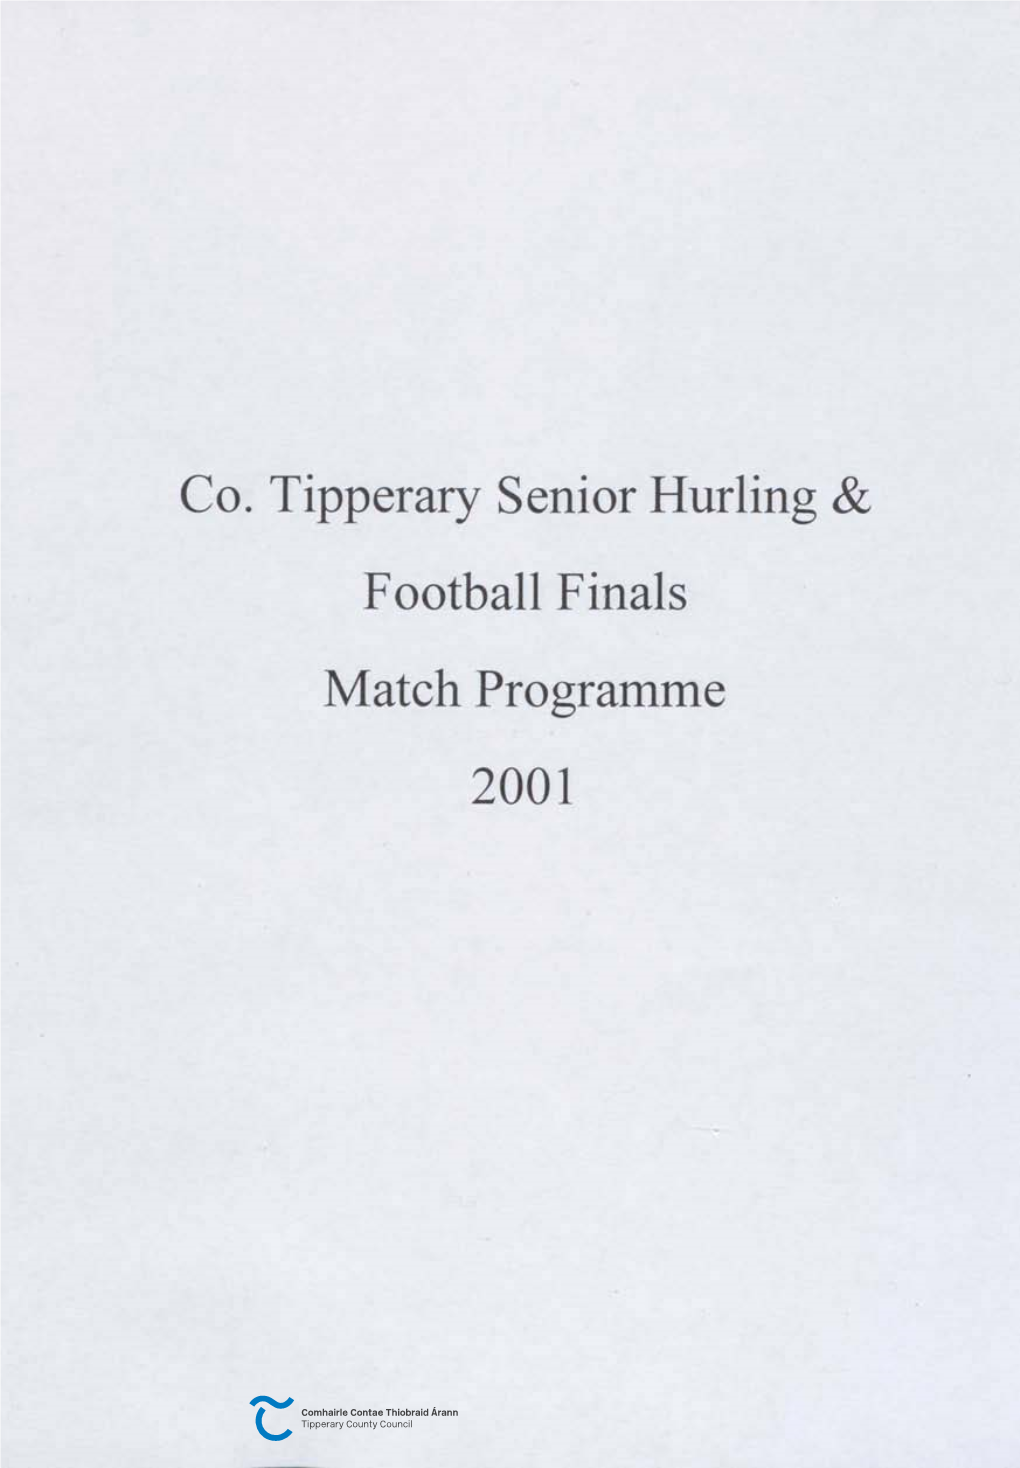 Co. Tipperary Senior Hurling & Football Finals Match Programme